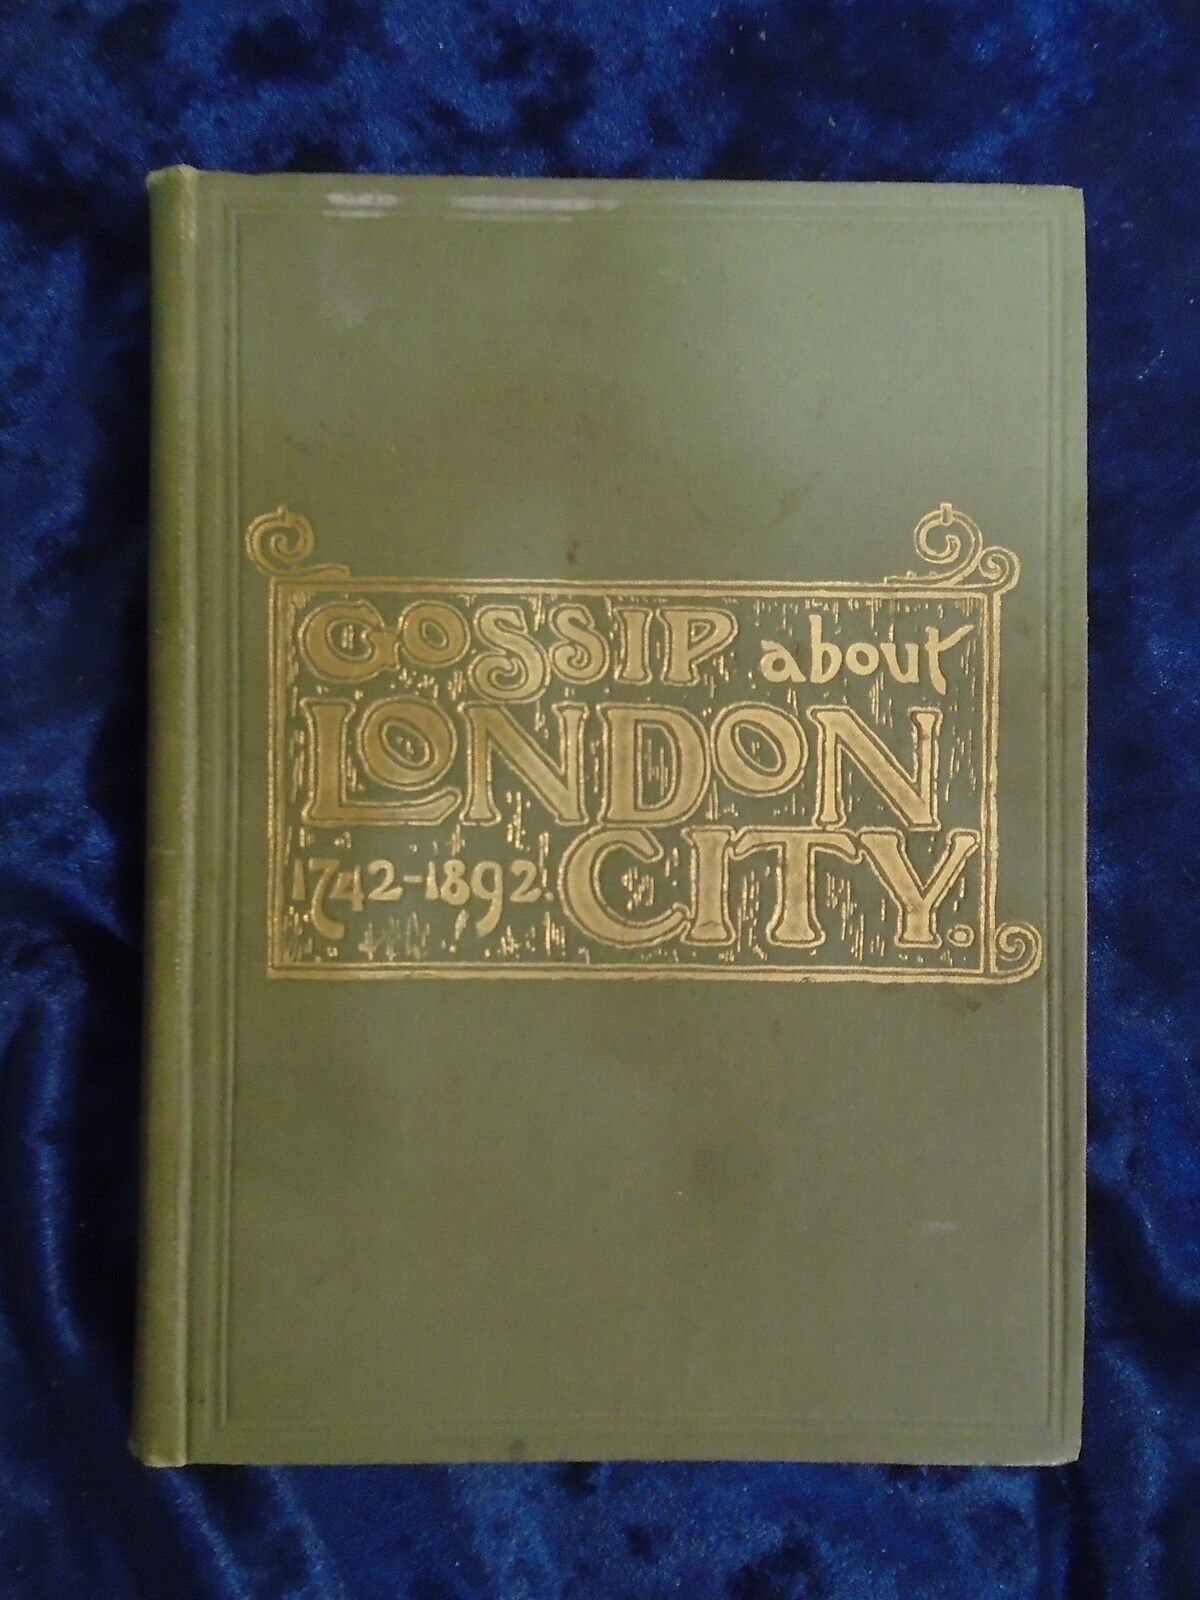 GOSSIP ABOUT LONDON CITY 1742-1892 - H/B - UK POST £3.25